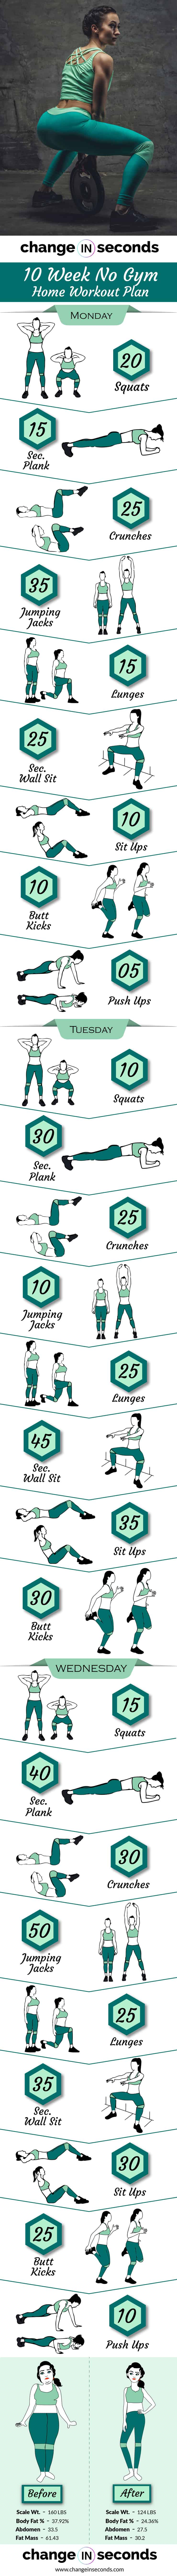 30 Day Beginner Workout Plan W